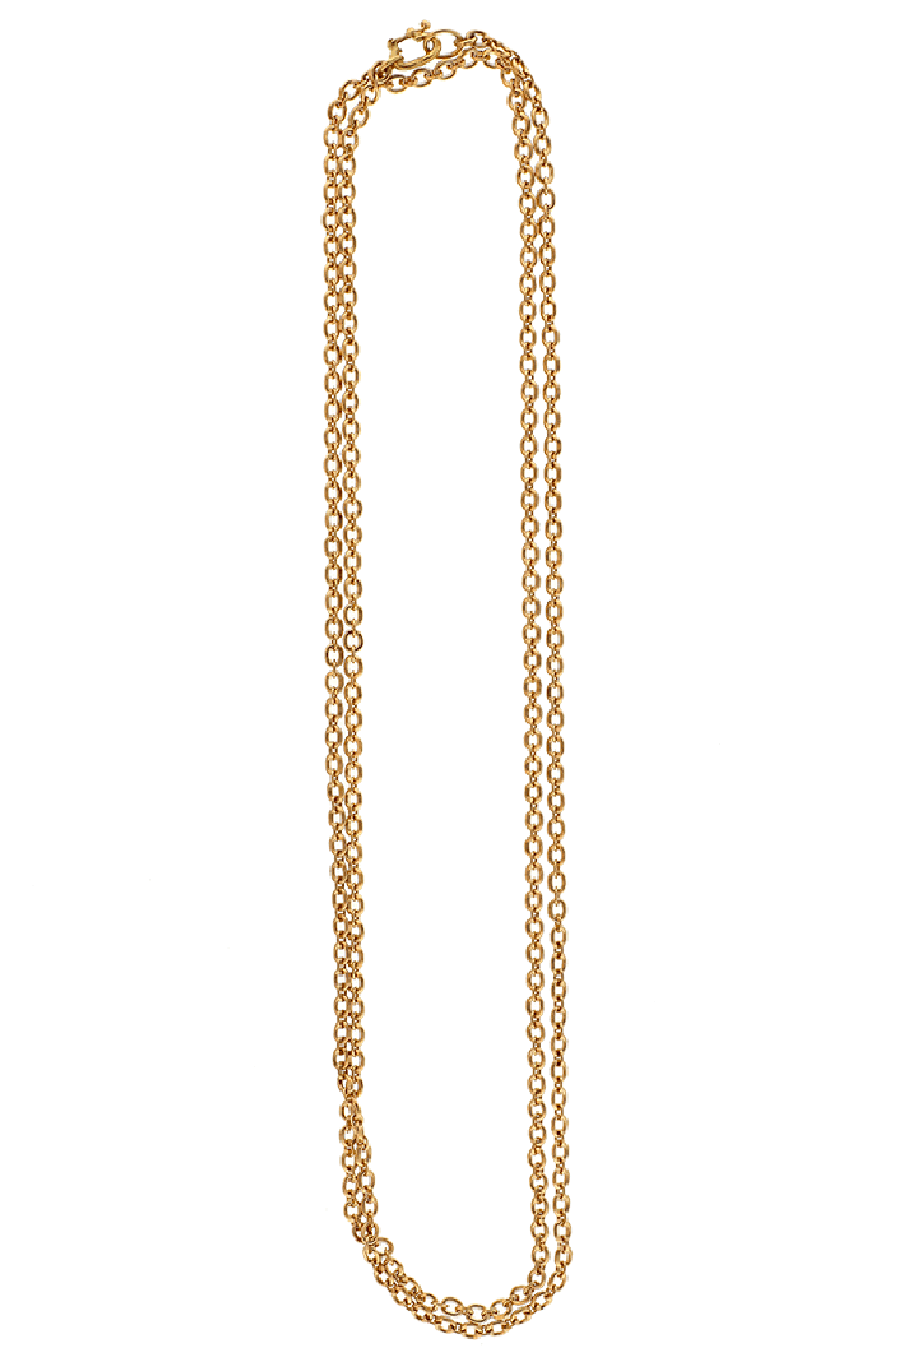 IRENE NEUWIRTH JEWELRY-Tiny Oval Link Chain Necklace-